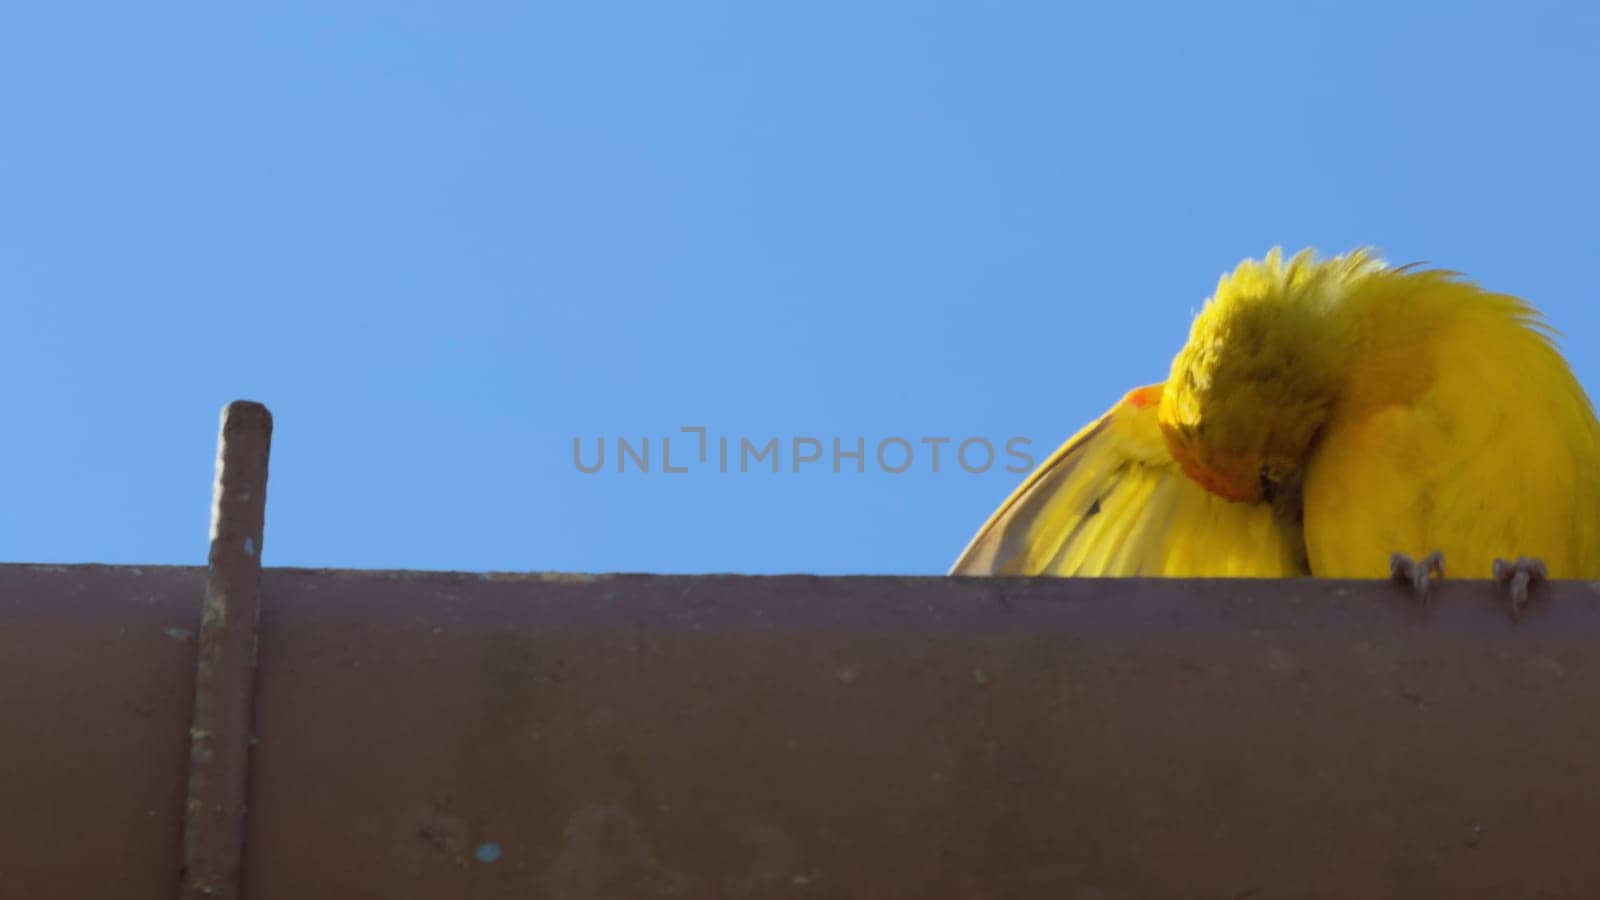 Small Yellow Bird Preening on Rooftop Edge Against Blue Sky by FerradalFCG